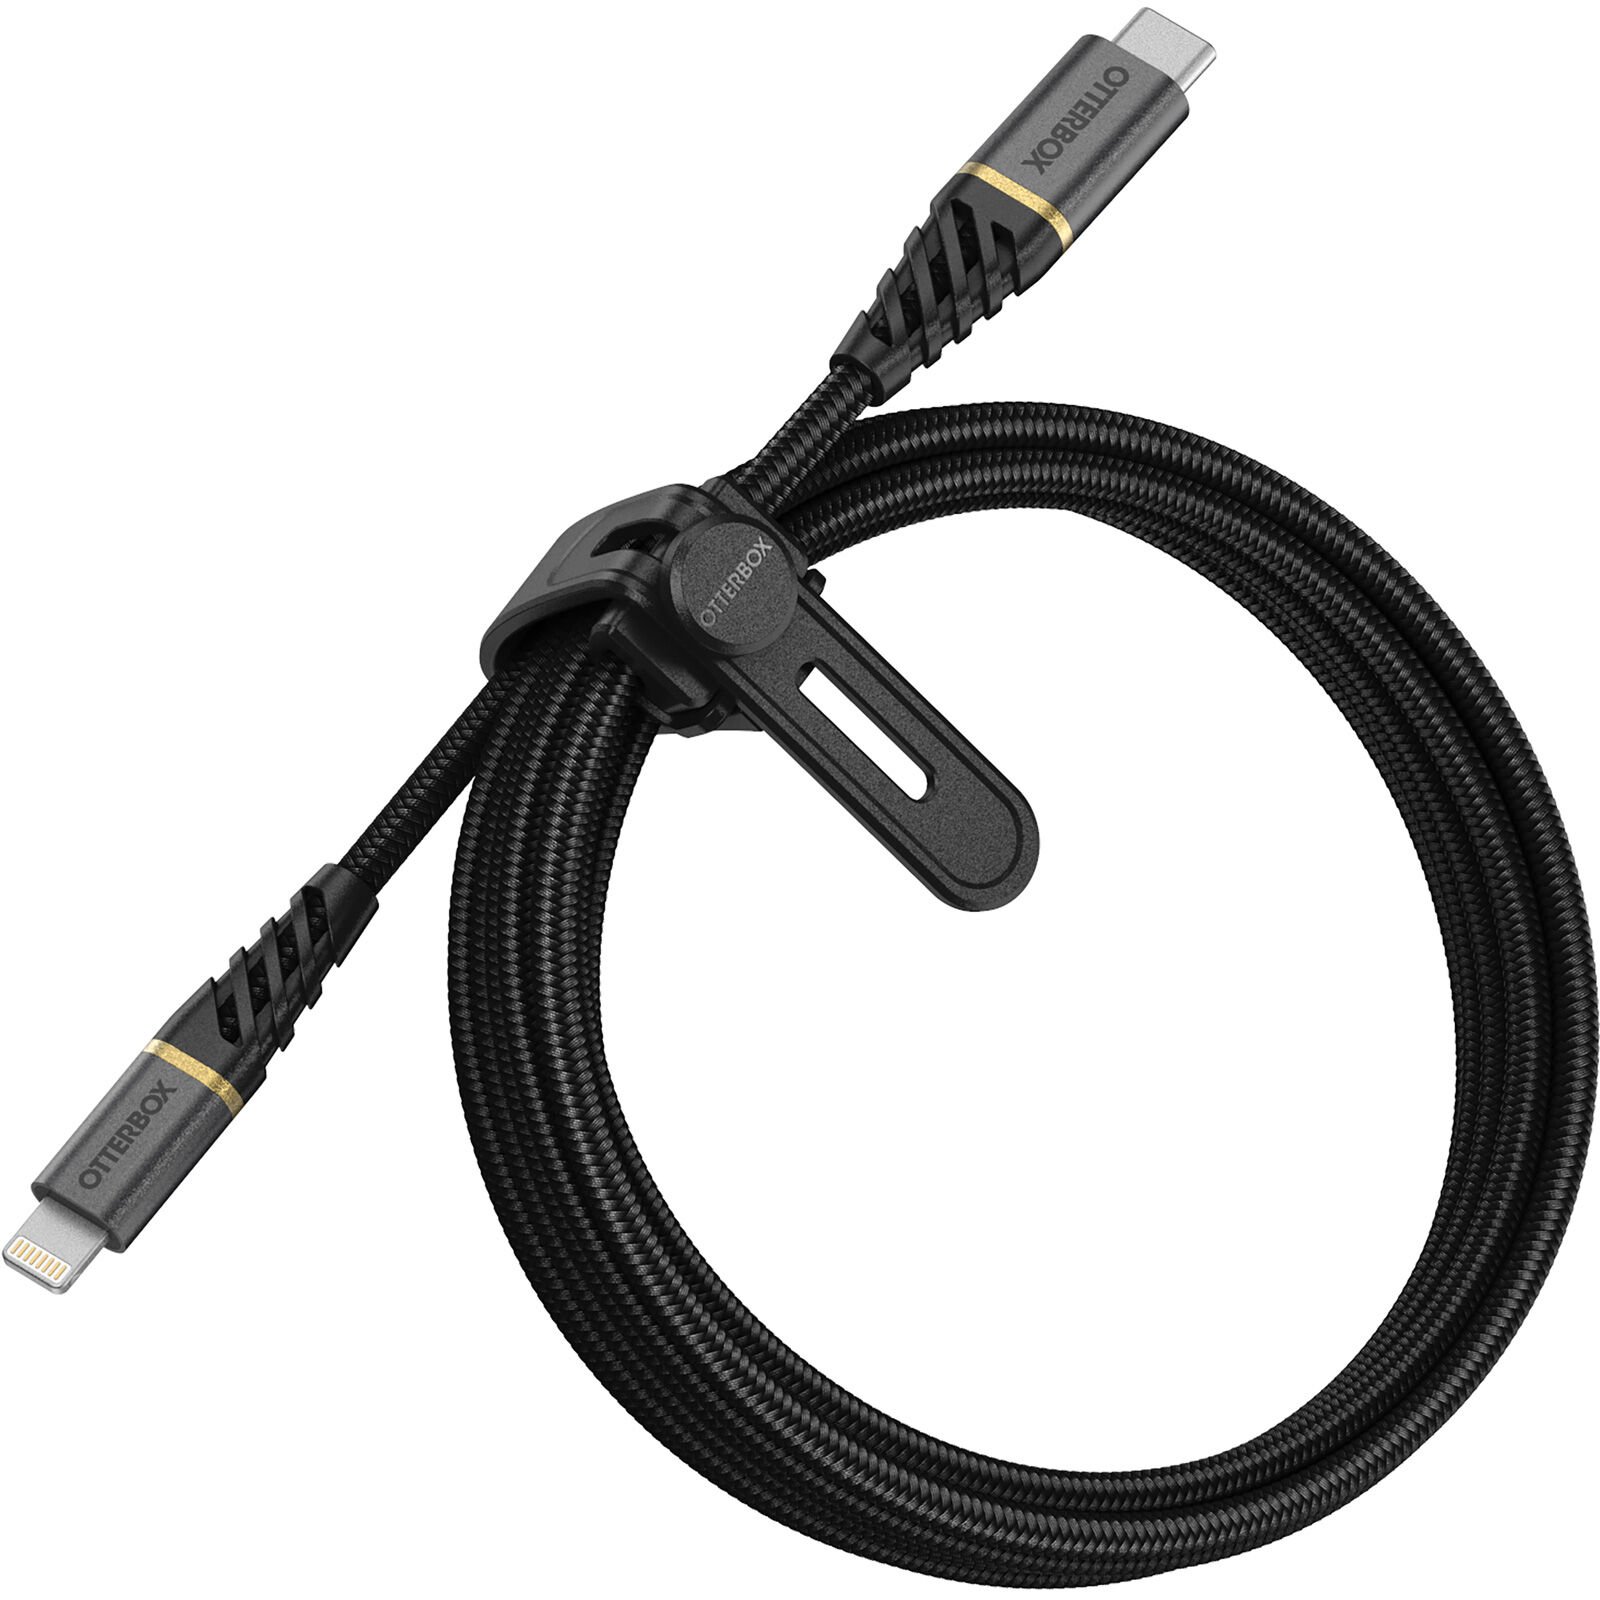 USB-C vers Lightning Câble 2 mètres Premium Fast Charge, noir